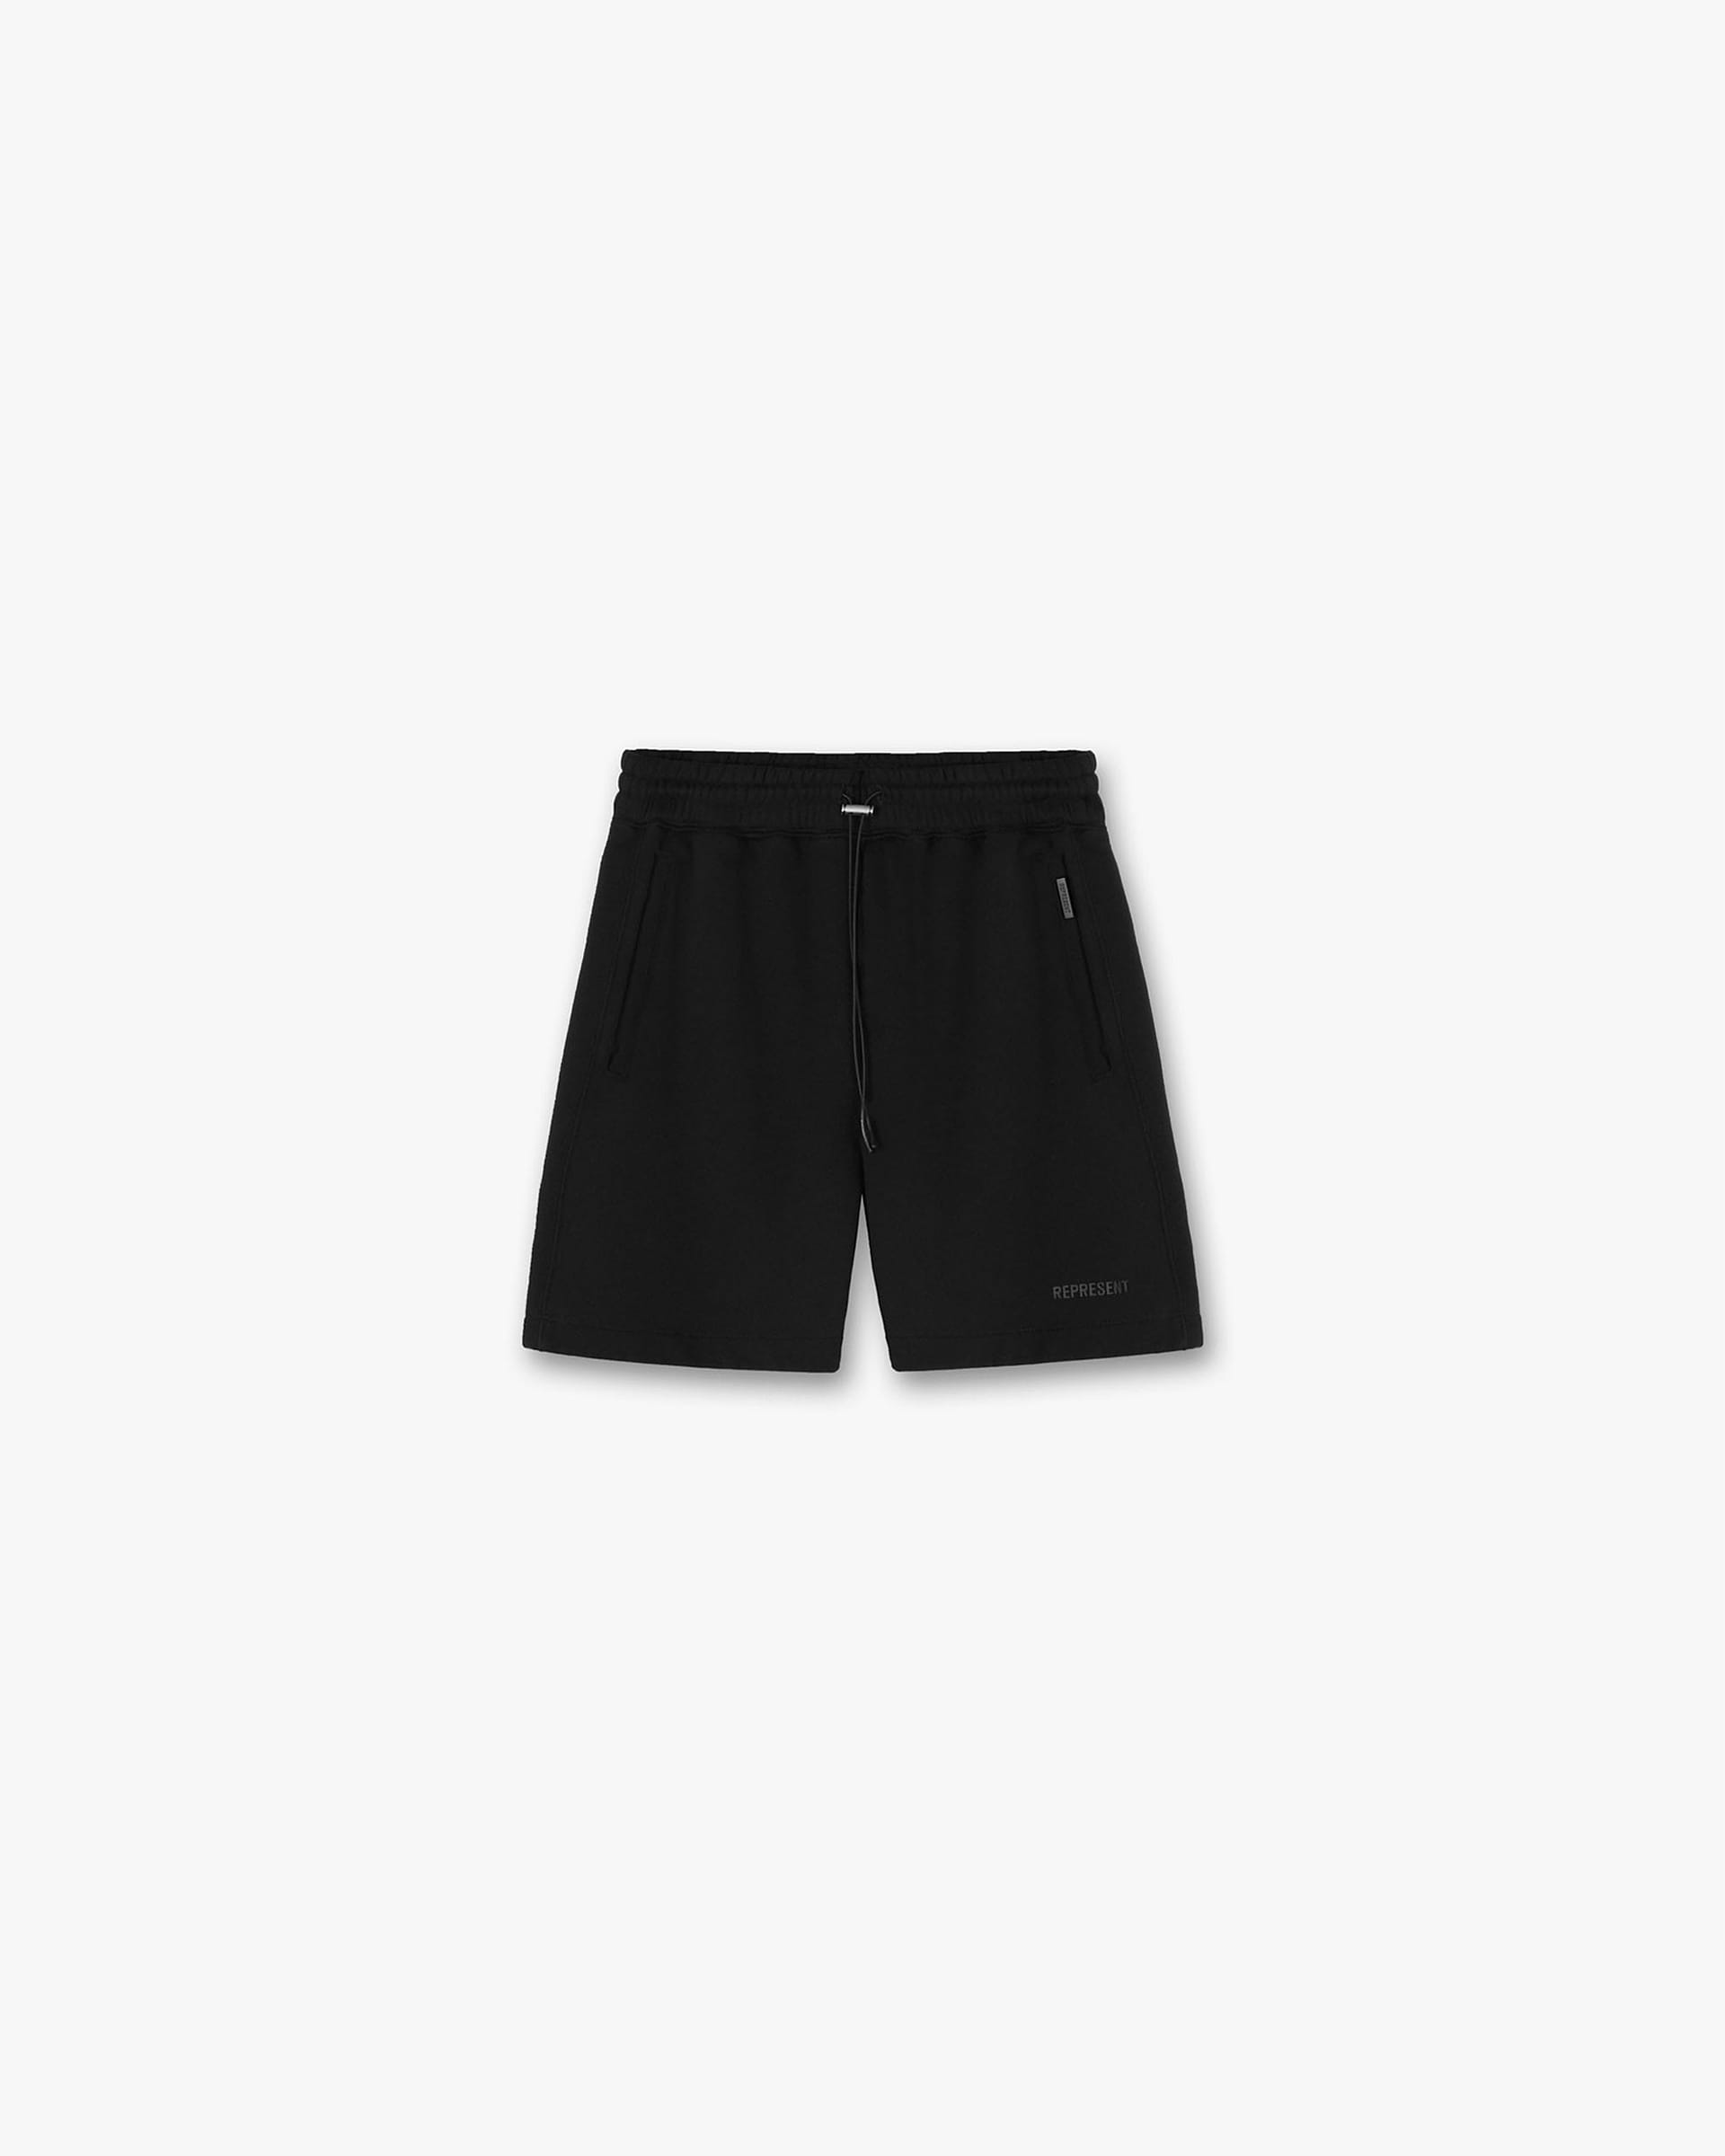 Blank Shorts | All Black Shorts BLANKS | Represent Clo